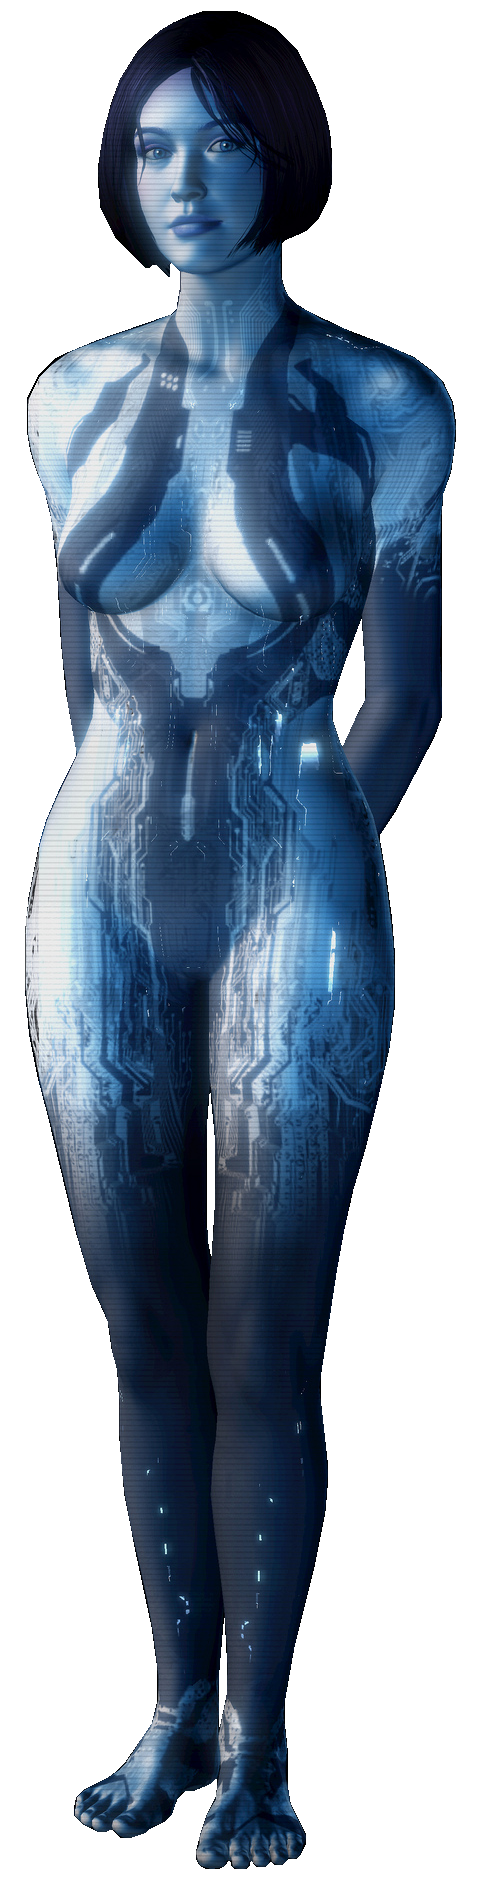 Cortana getting a Terminator body but its exterior organic sections look li...